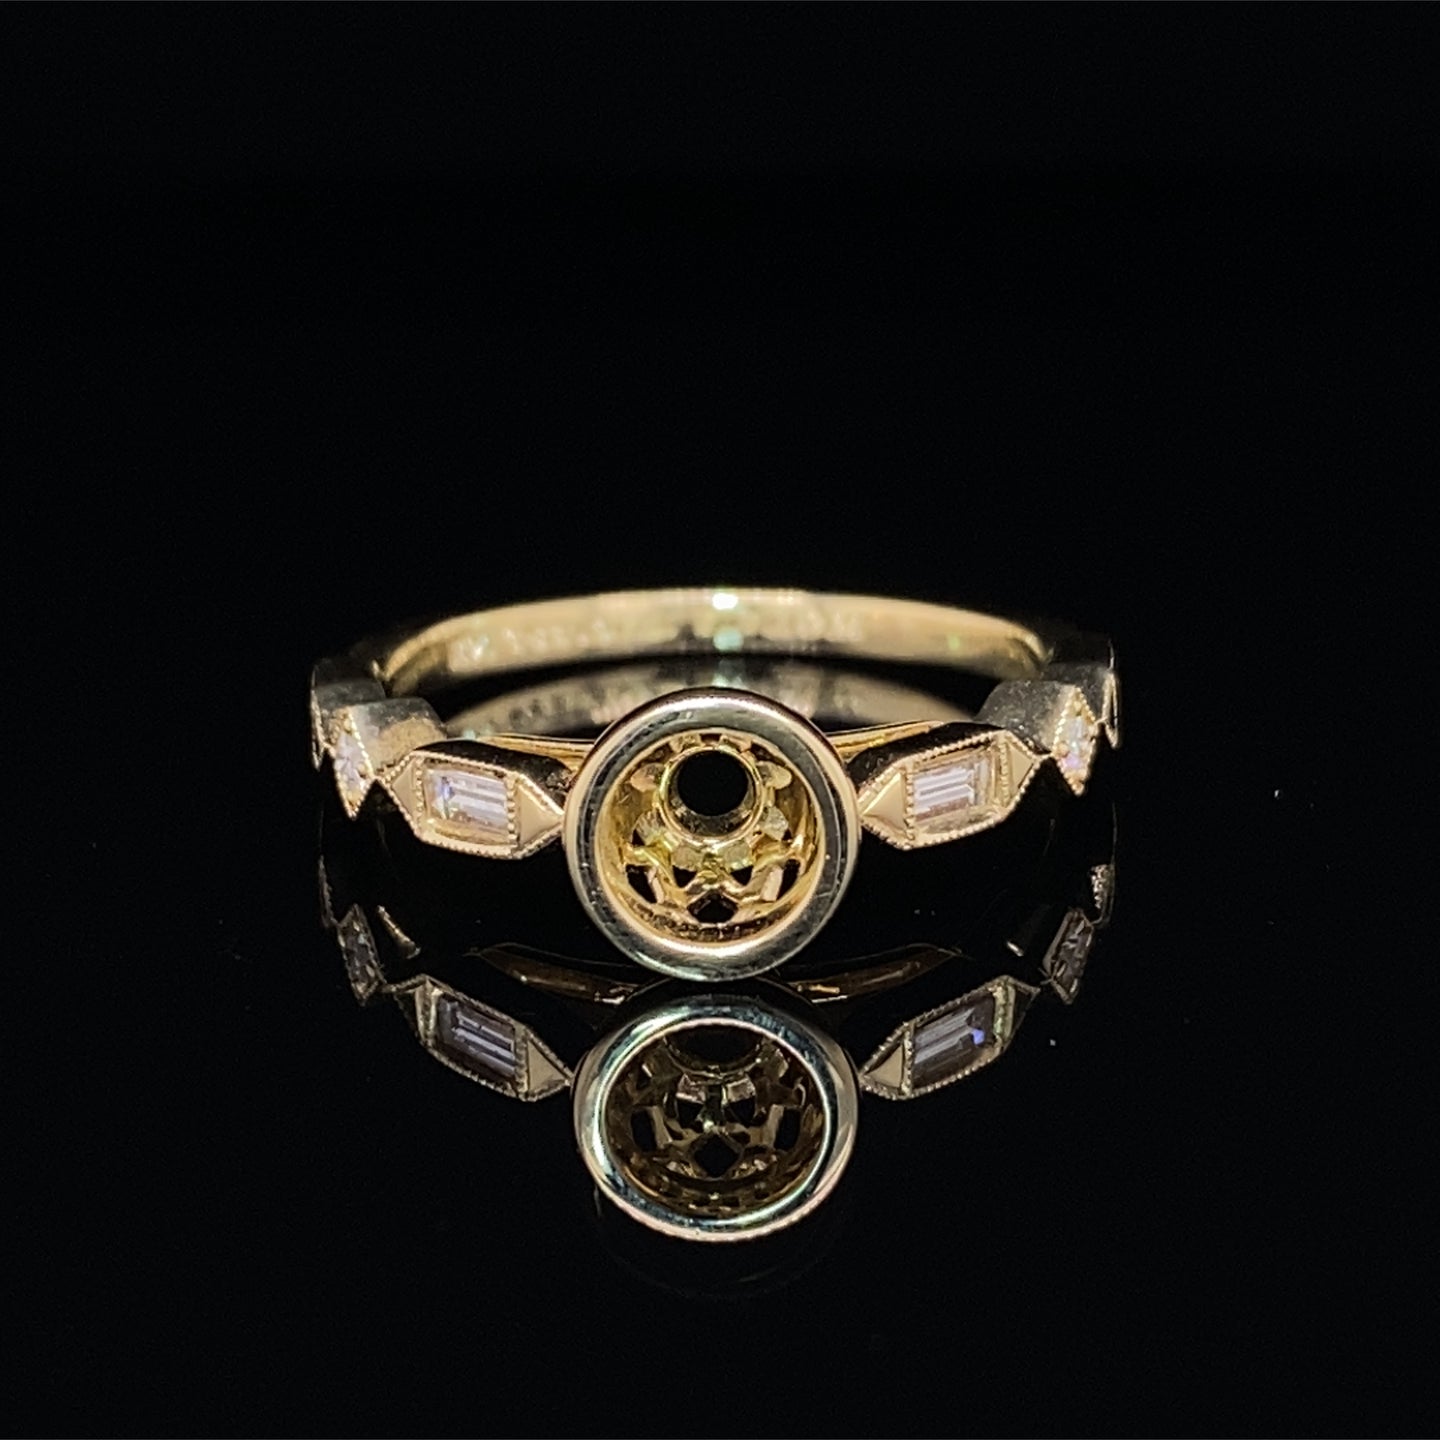 Round Bezel and Diamond Engagement Ring Setting 14K Yellow Gold